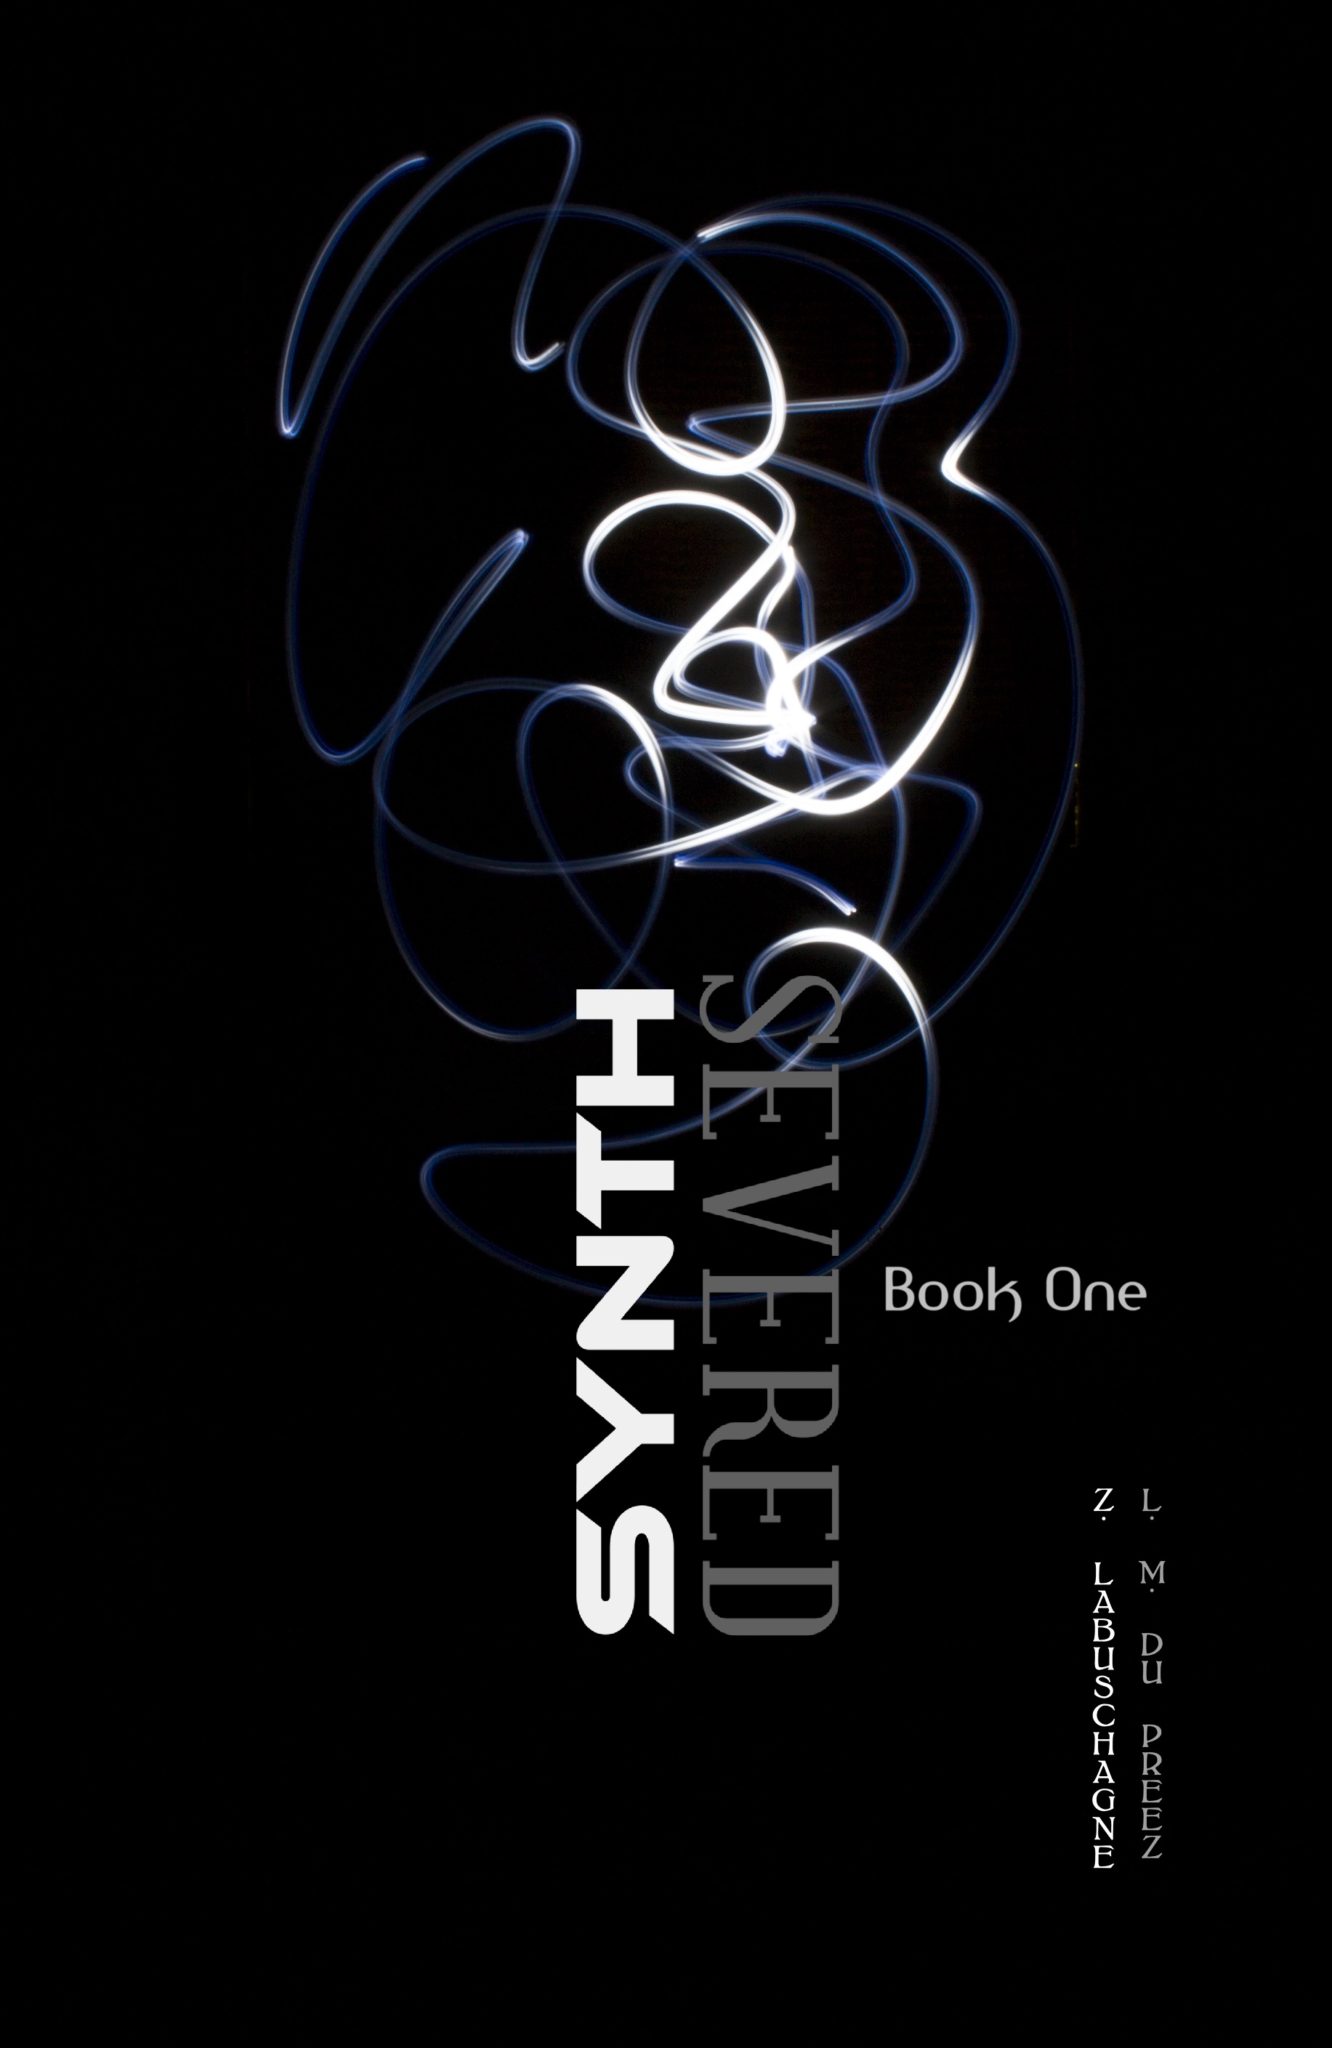 FREE: Synth: SEVERED by Z. Labuschagne & L. M. du Preez